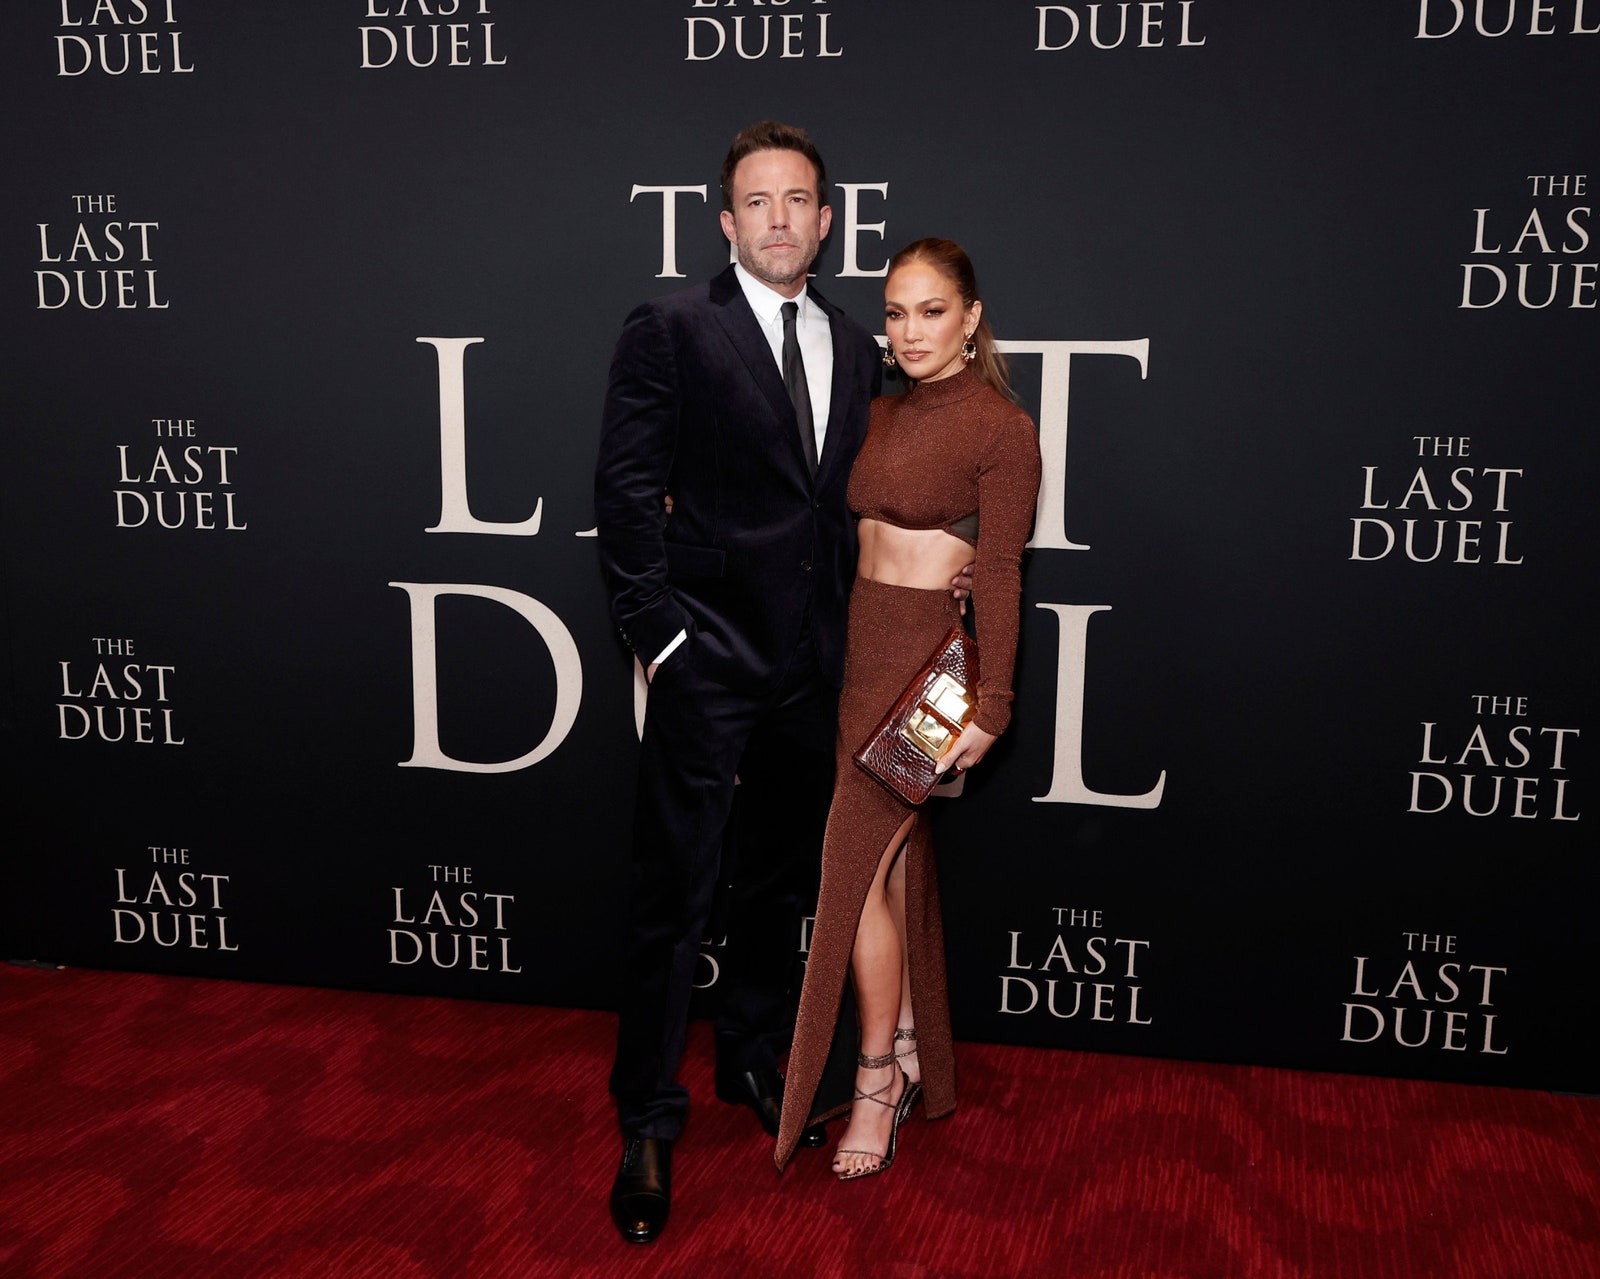 La pareja del año reaparece: Jennifer Lopez acompaña a Ben Affleck en el estreno de “The Last Duel”